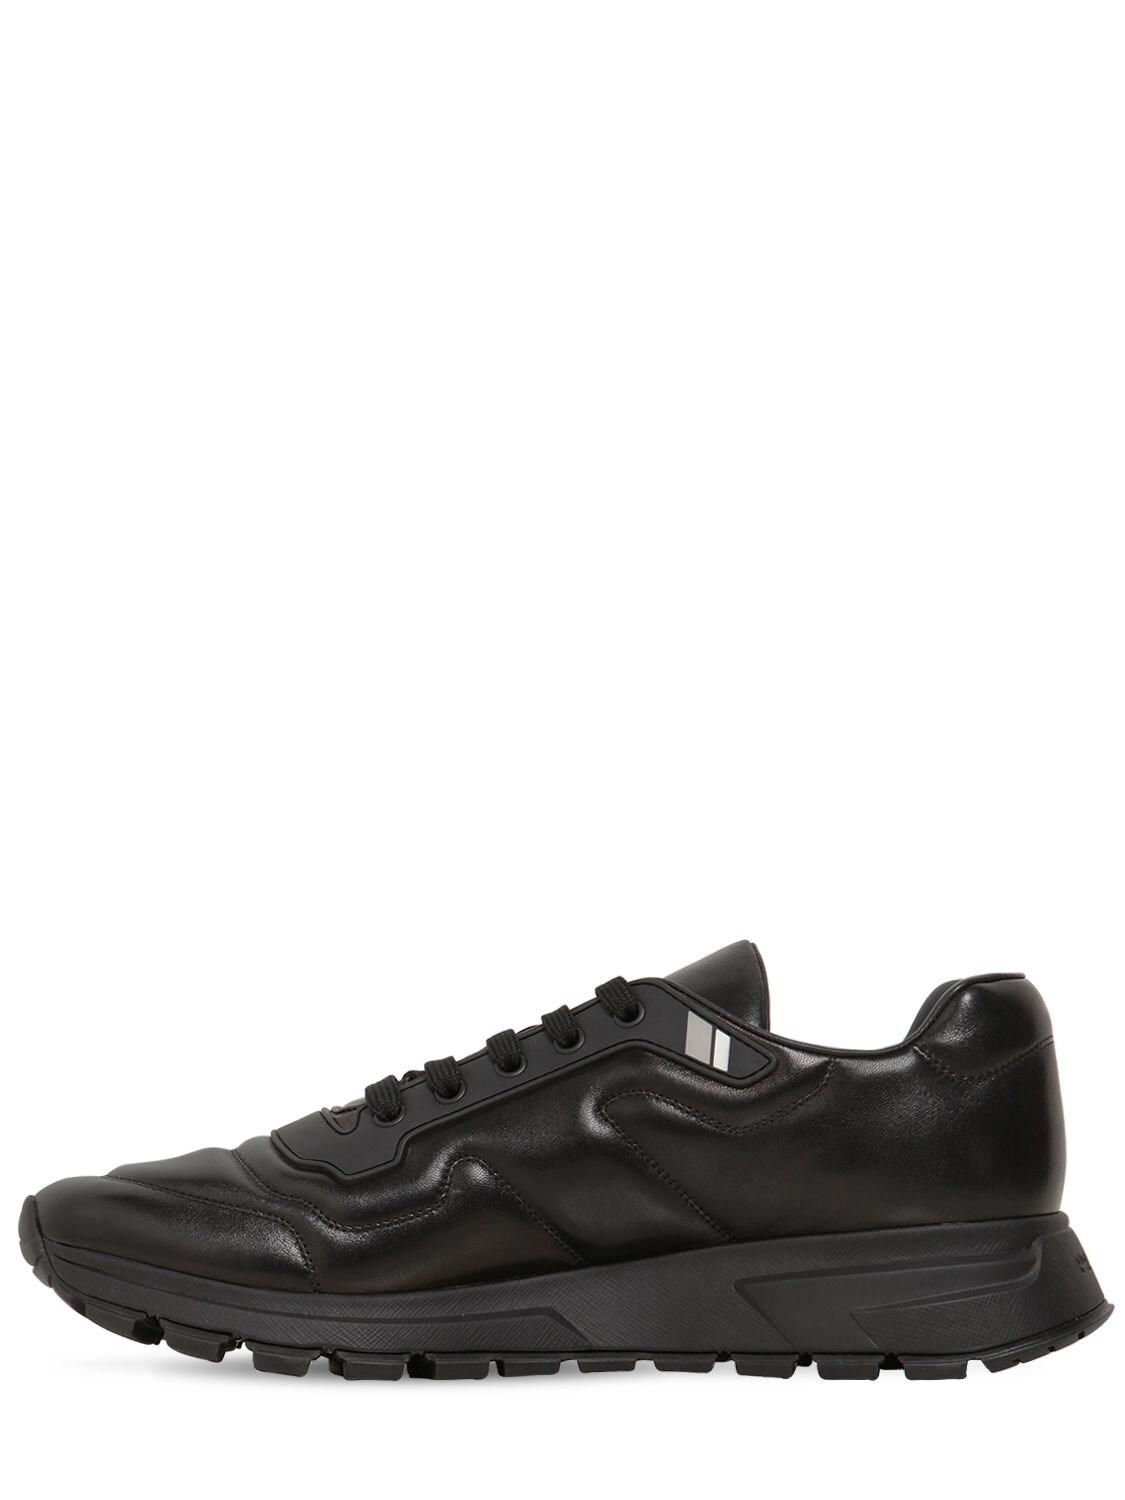 Prada Prax 01 Nappa Running Leather Sneakers in Black for Men - Lyst